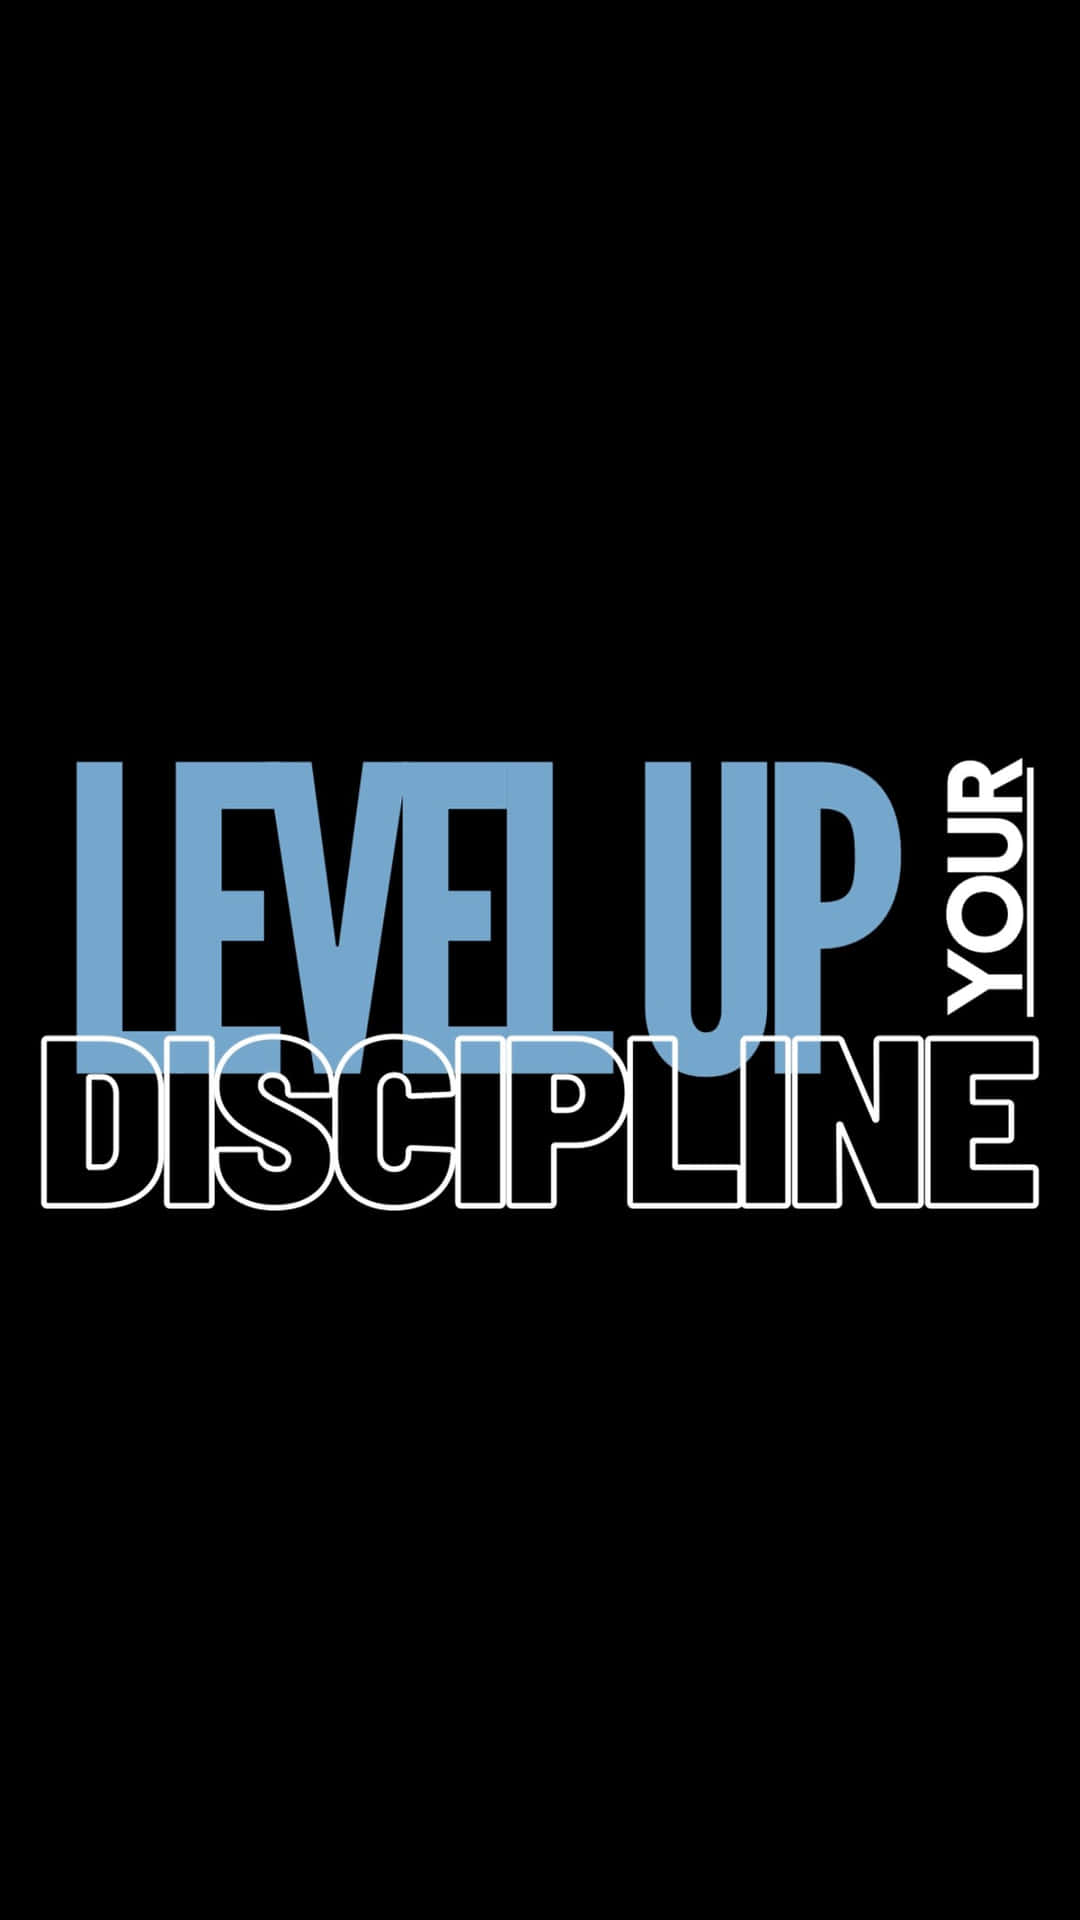 Level Up Your Discipline Motivational Poster Wallpaper